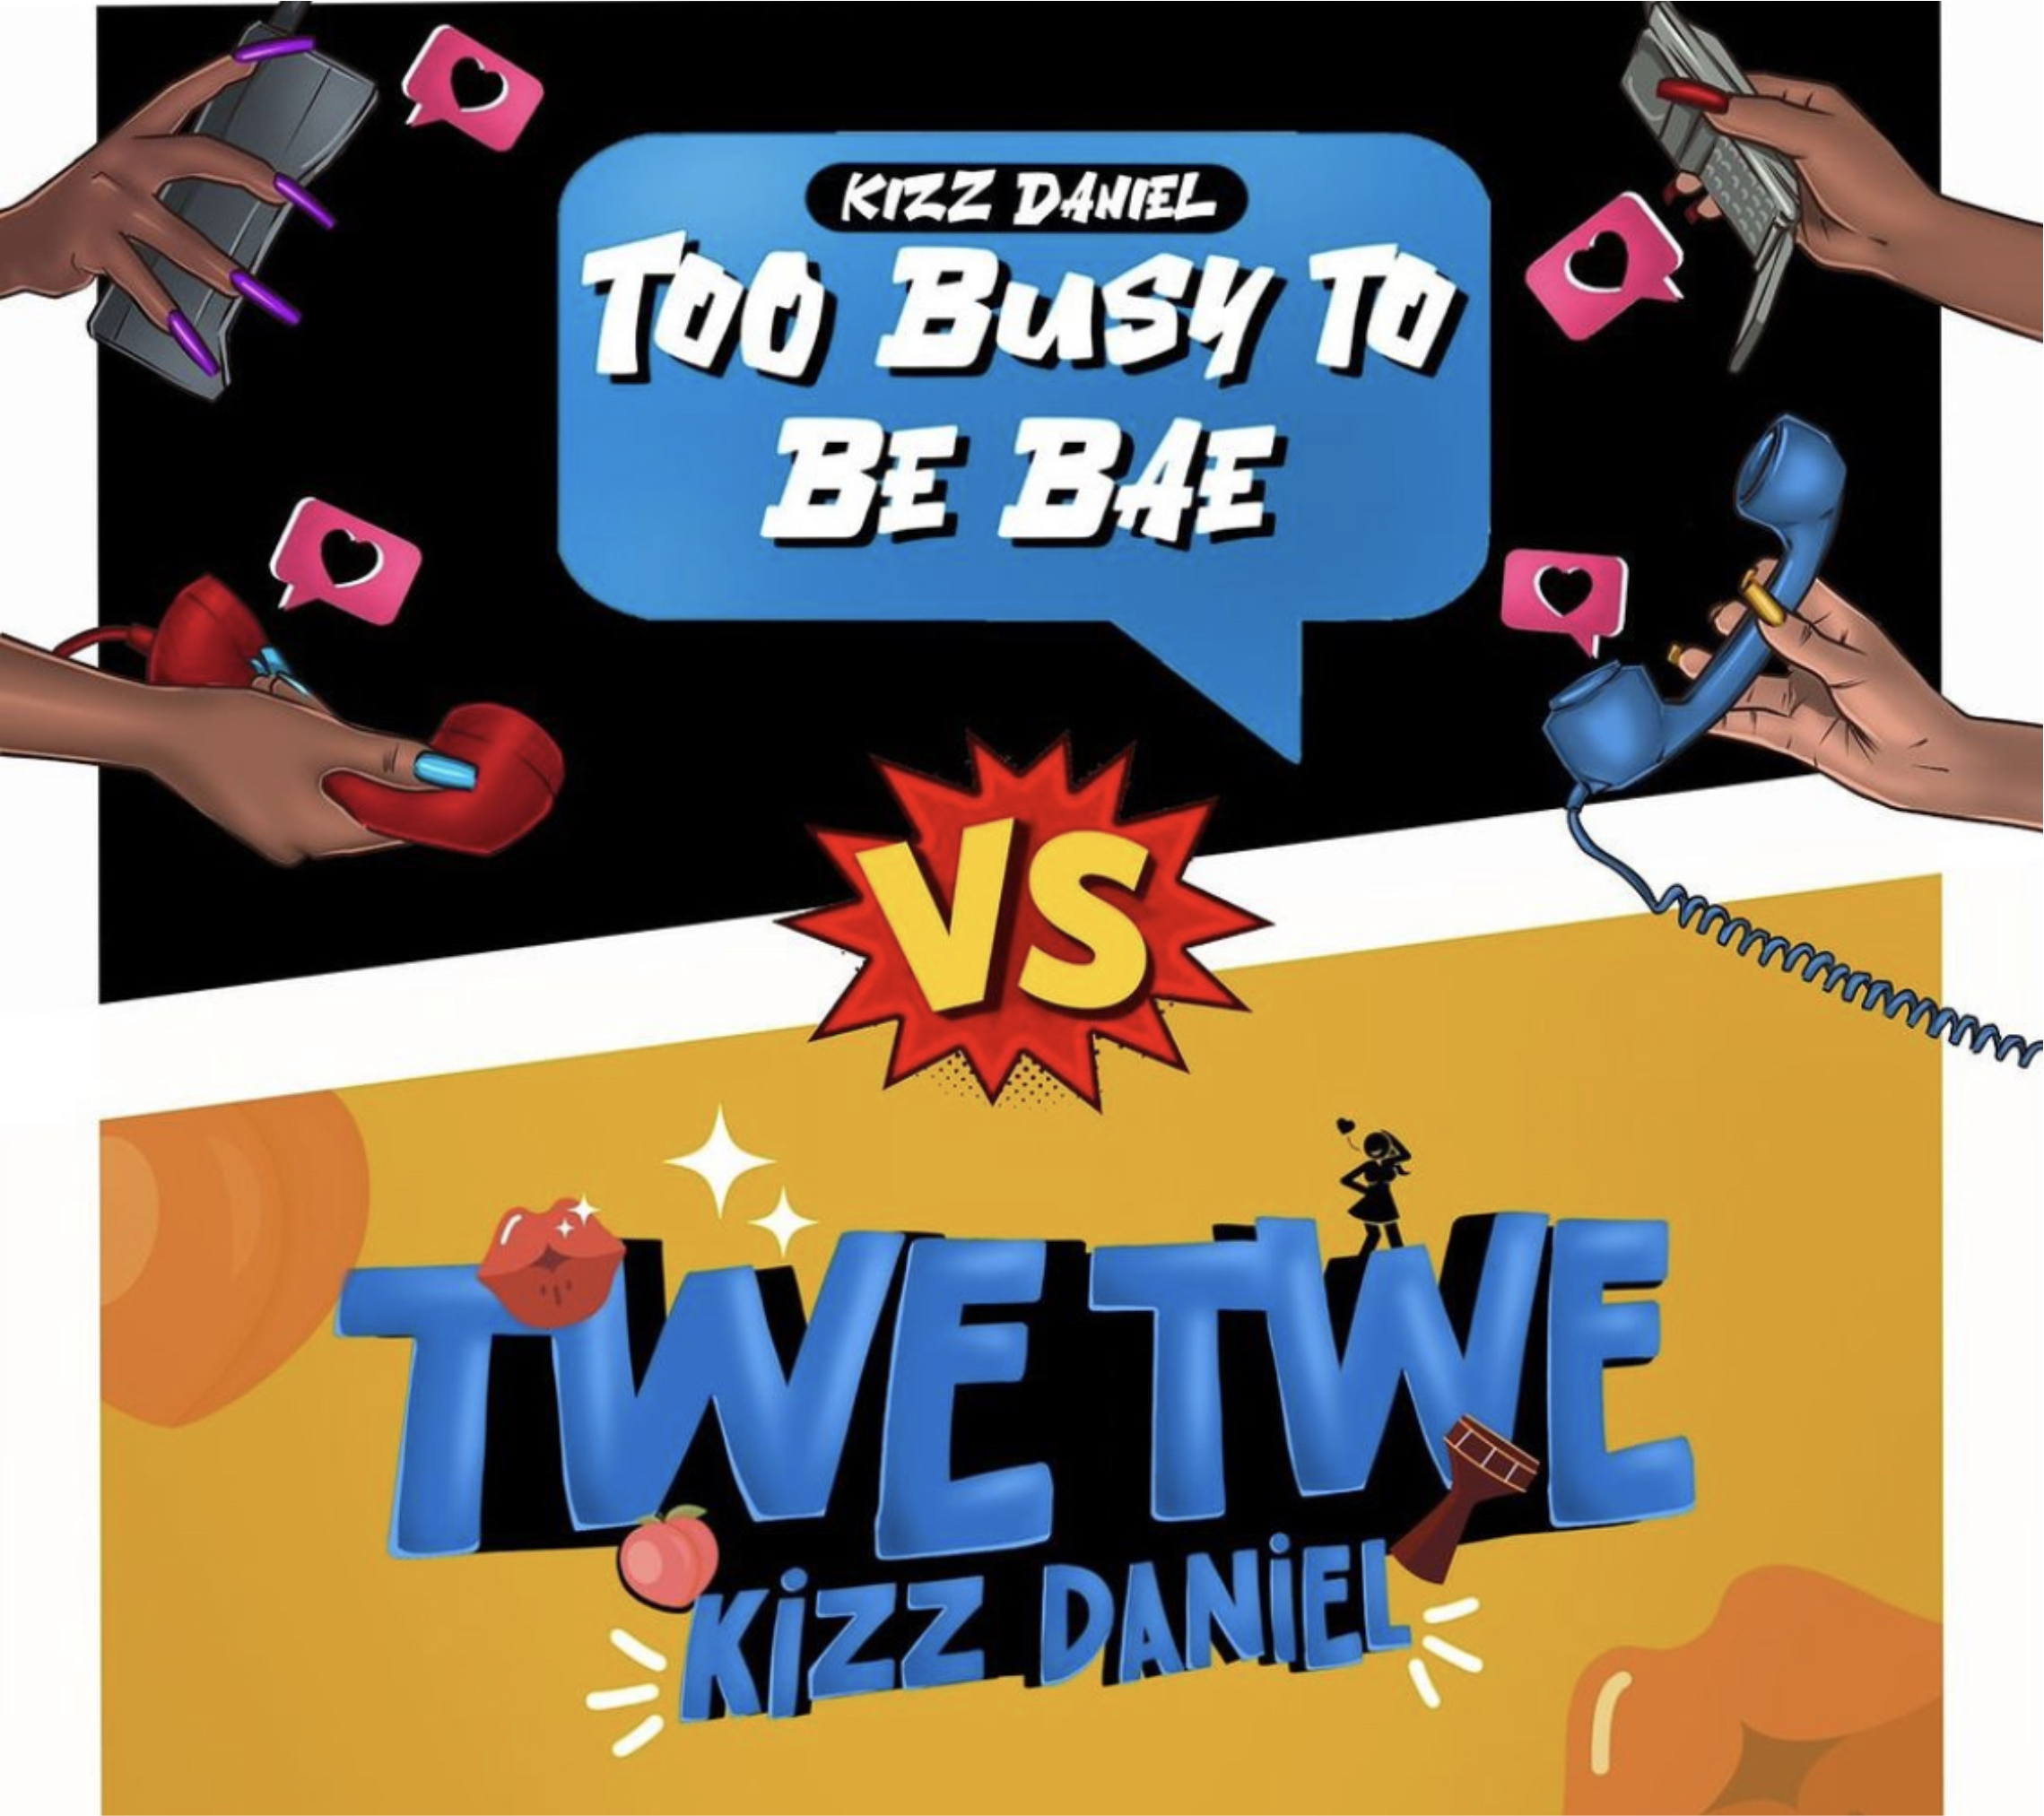 New Music: Kizz Daniel — Twe Twe and Too Busy To Be Bae